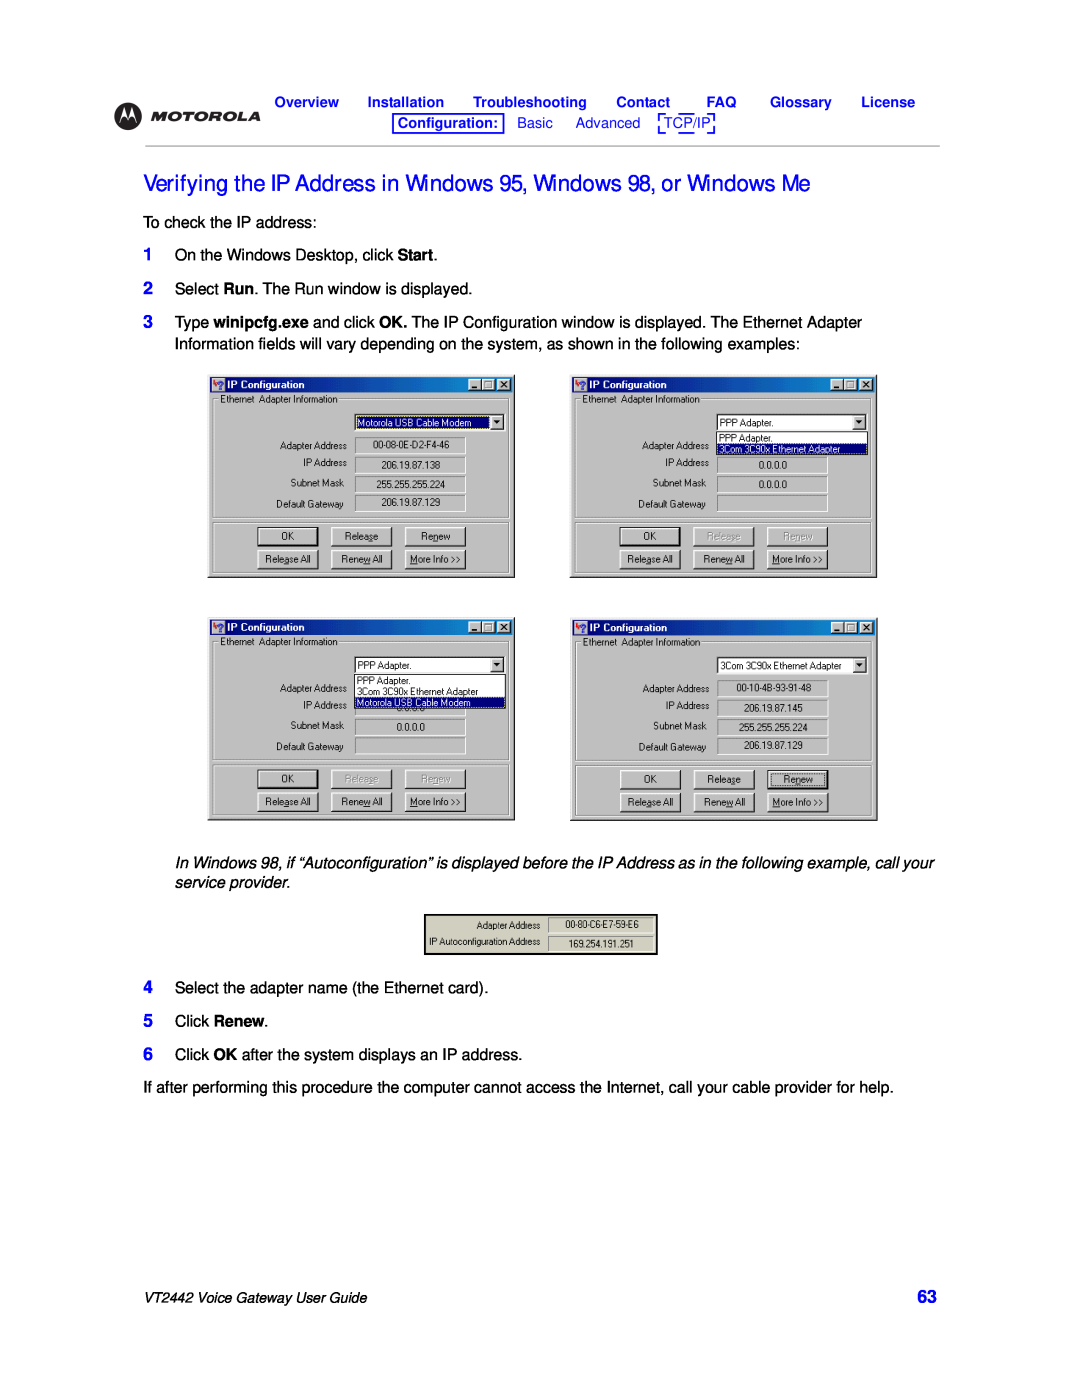 Motorola VT2442 manual Verifying the IP Address in Windows 95, Windows 98, or Windows Me 